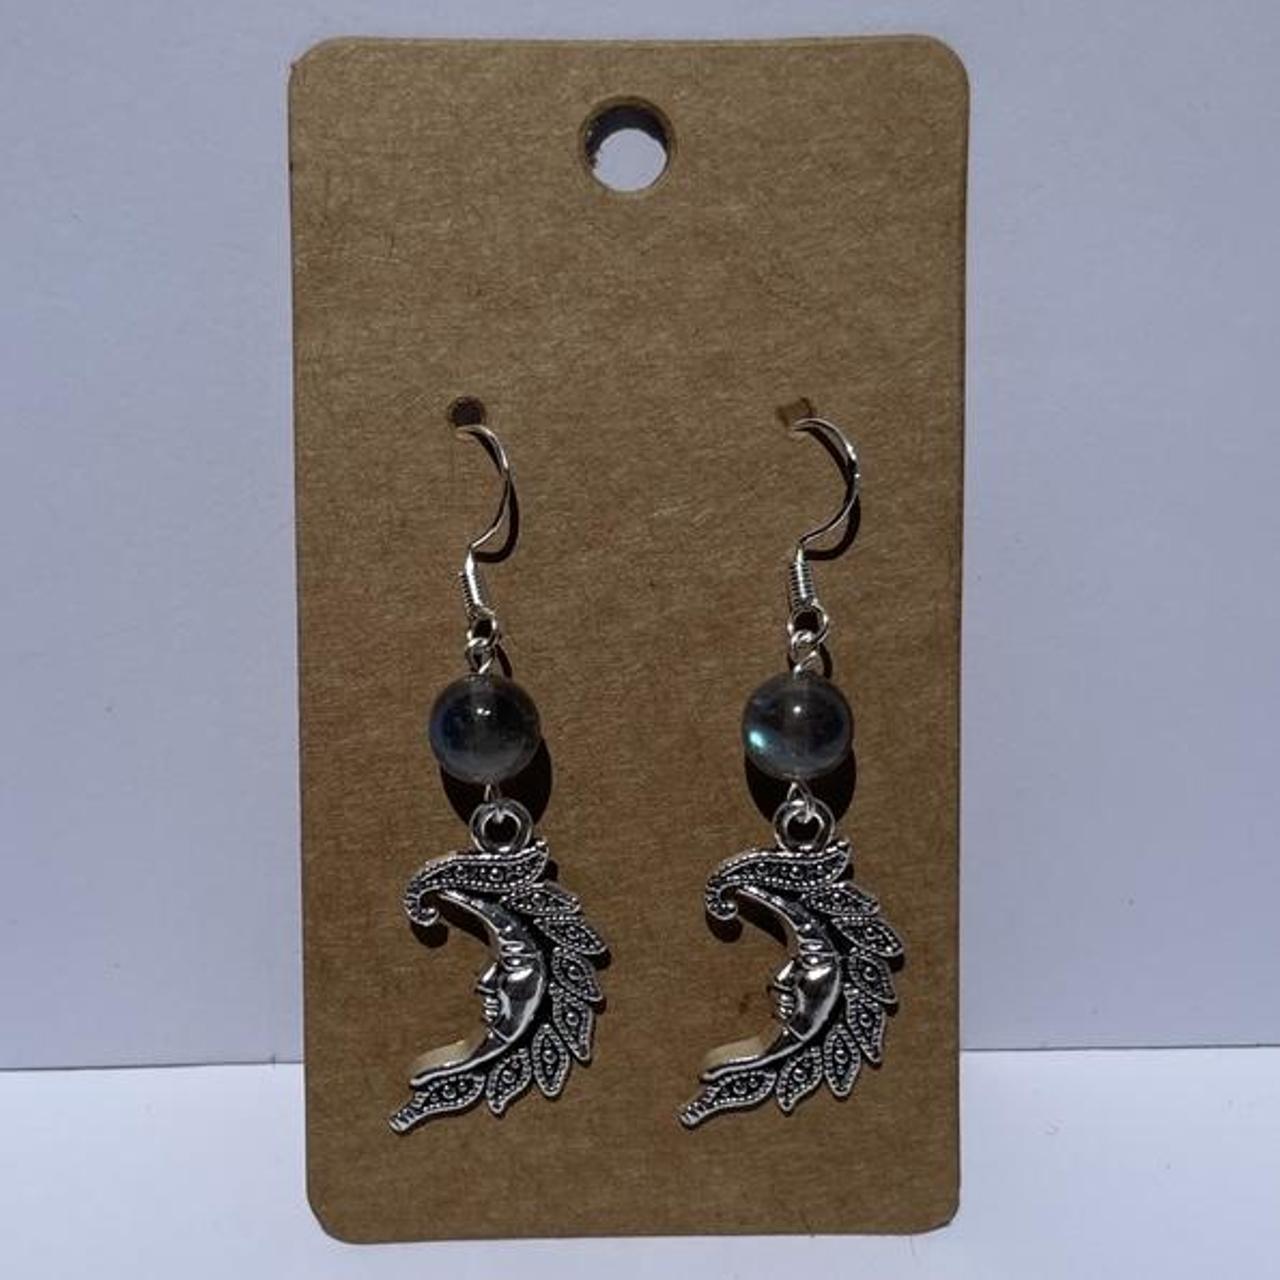 Product Image 3 - Handmade silver wire earrings!

🌟 Handmade